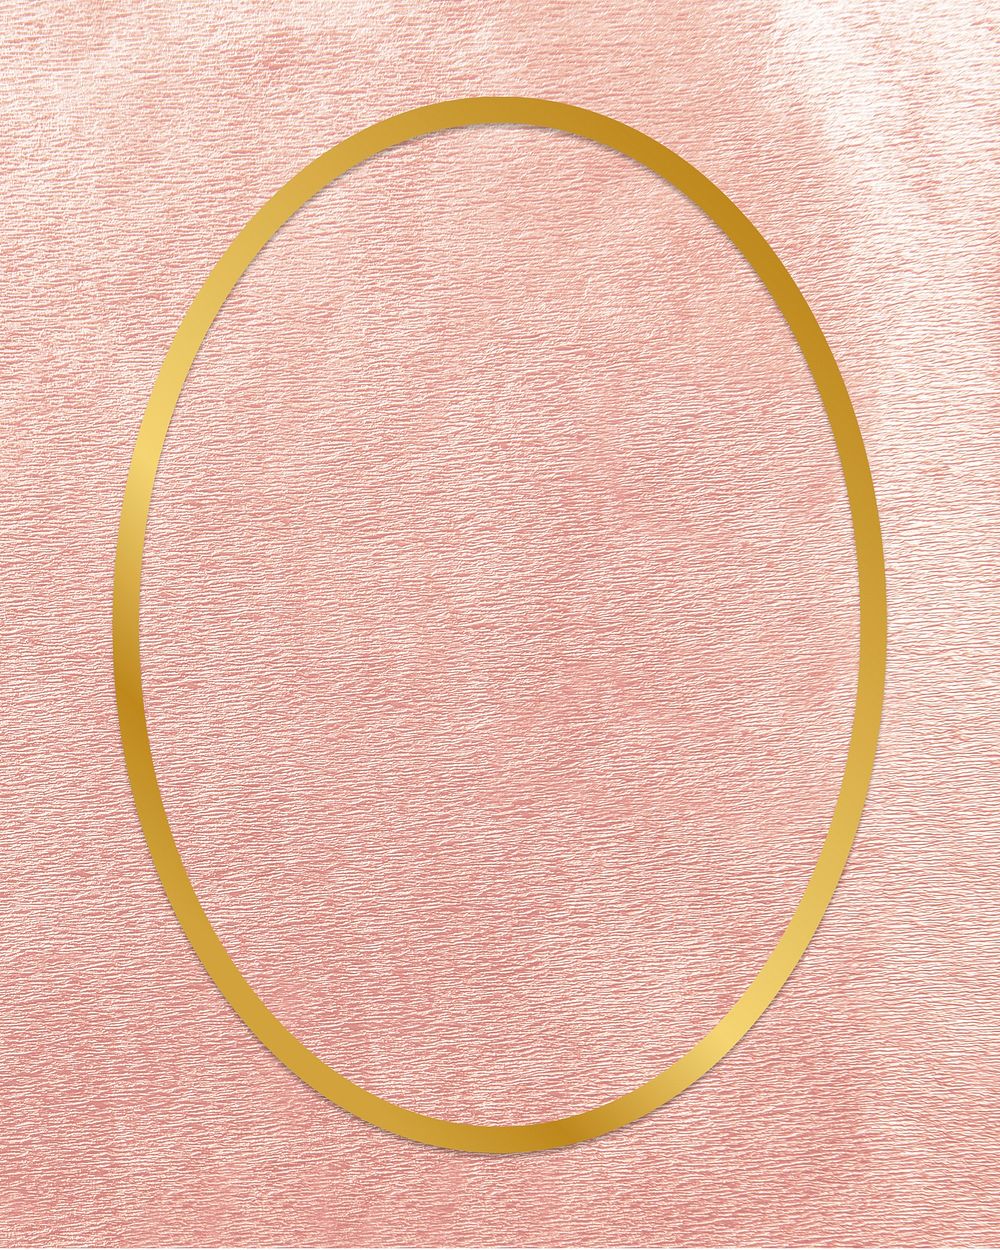 Gold oval frame on a rose gold background